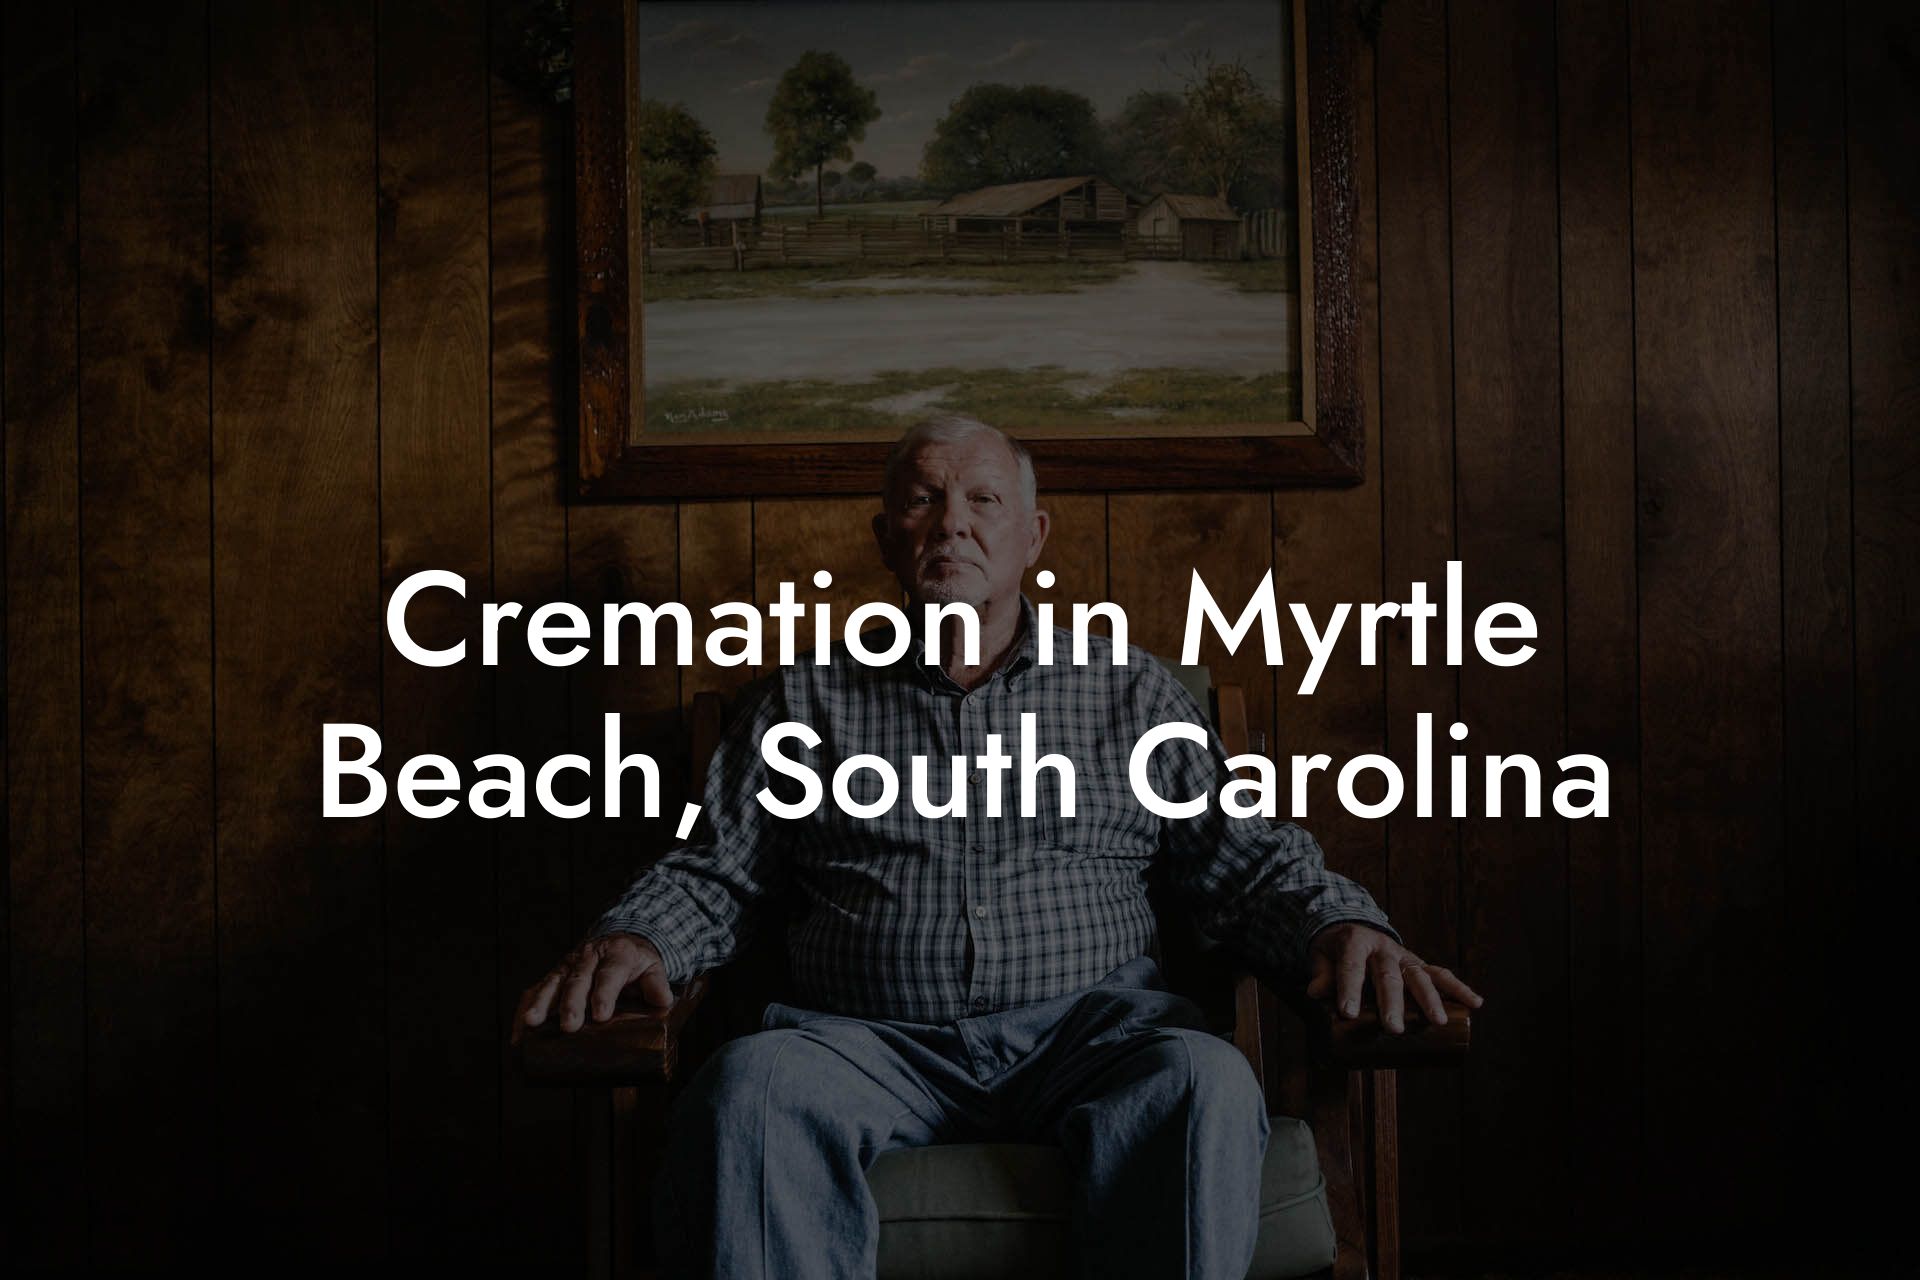 Cremation in Myrtle Beach, South Carolina